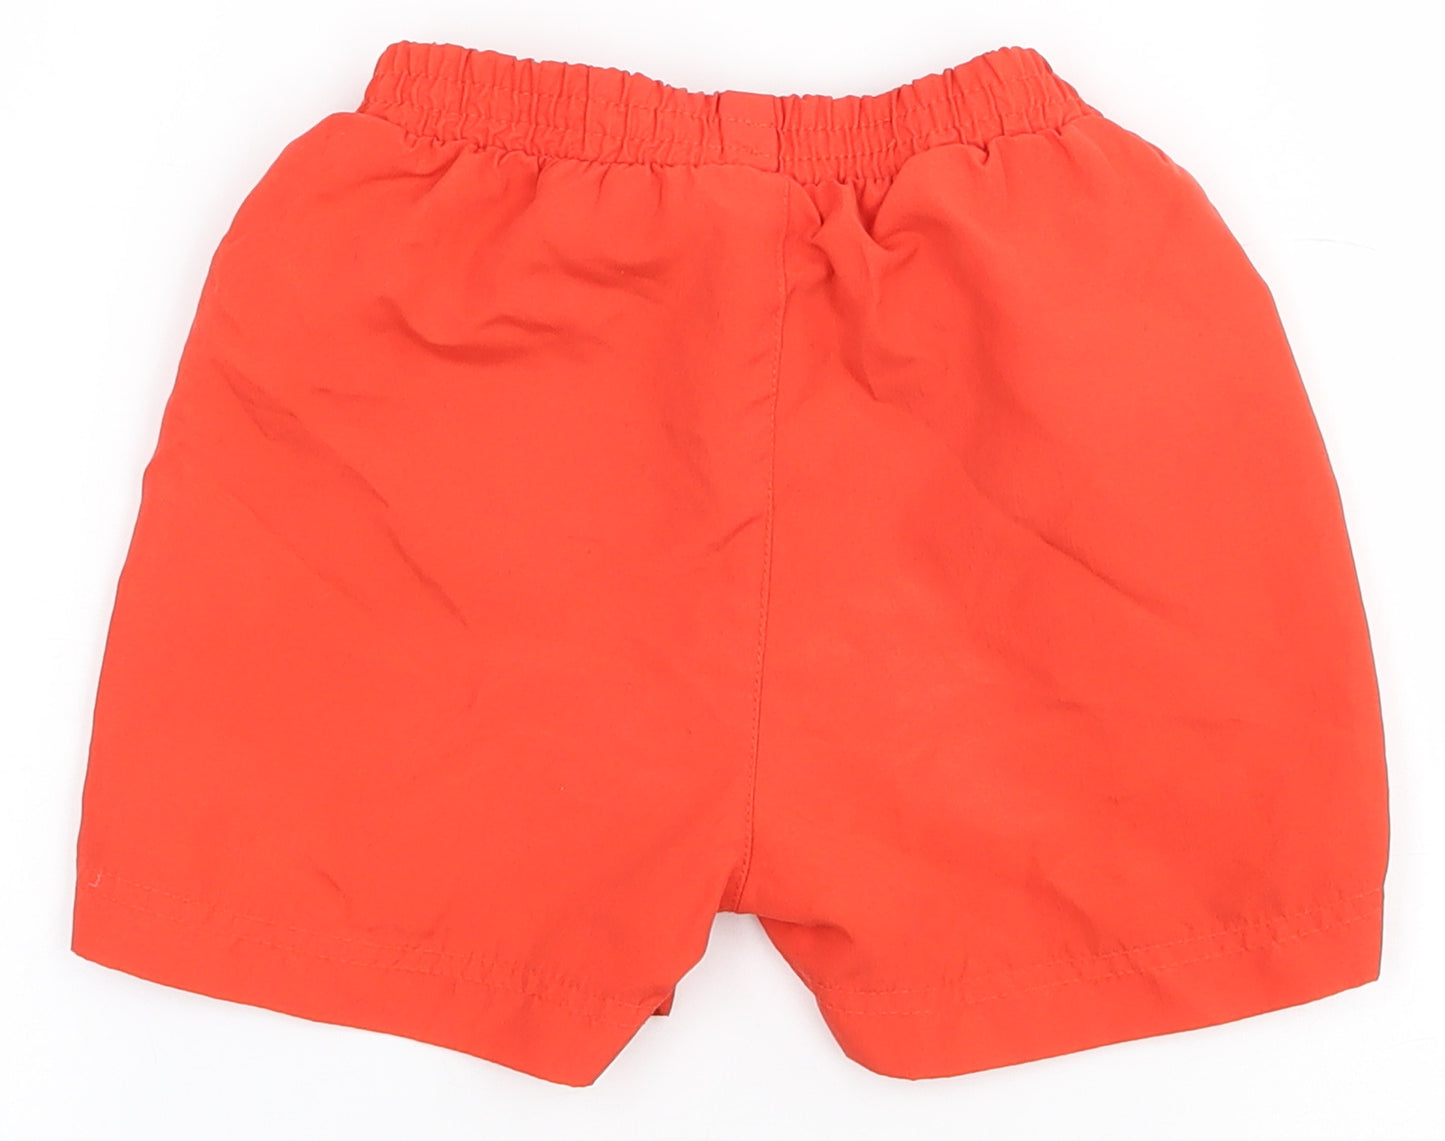 Slazenger Boys Red  100% Polyester Sweat Shorts Size 3-4 Years  Regular